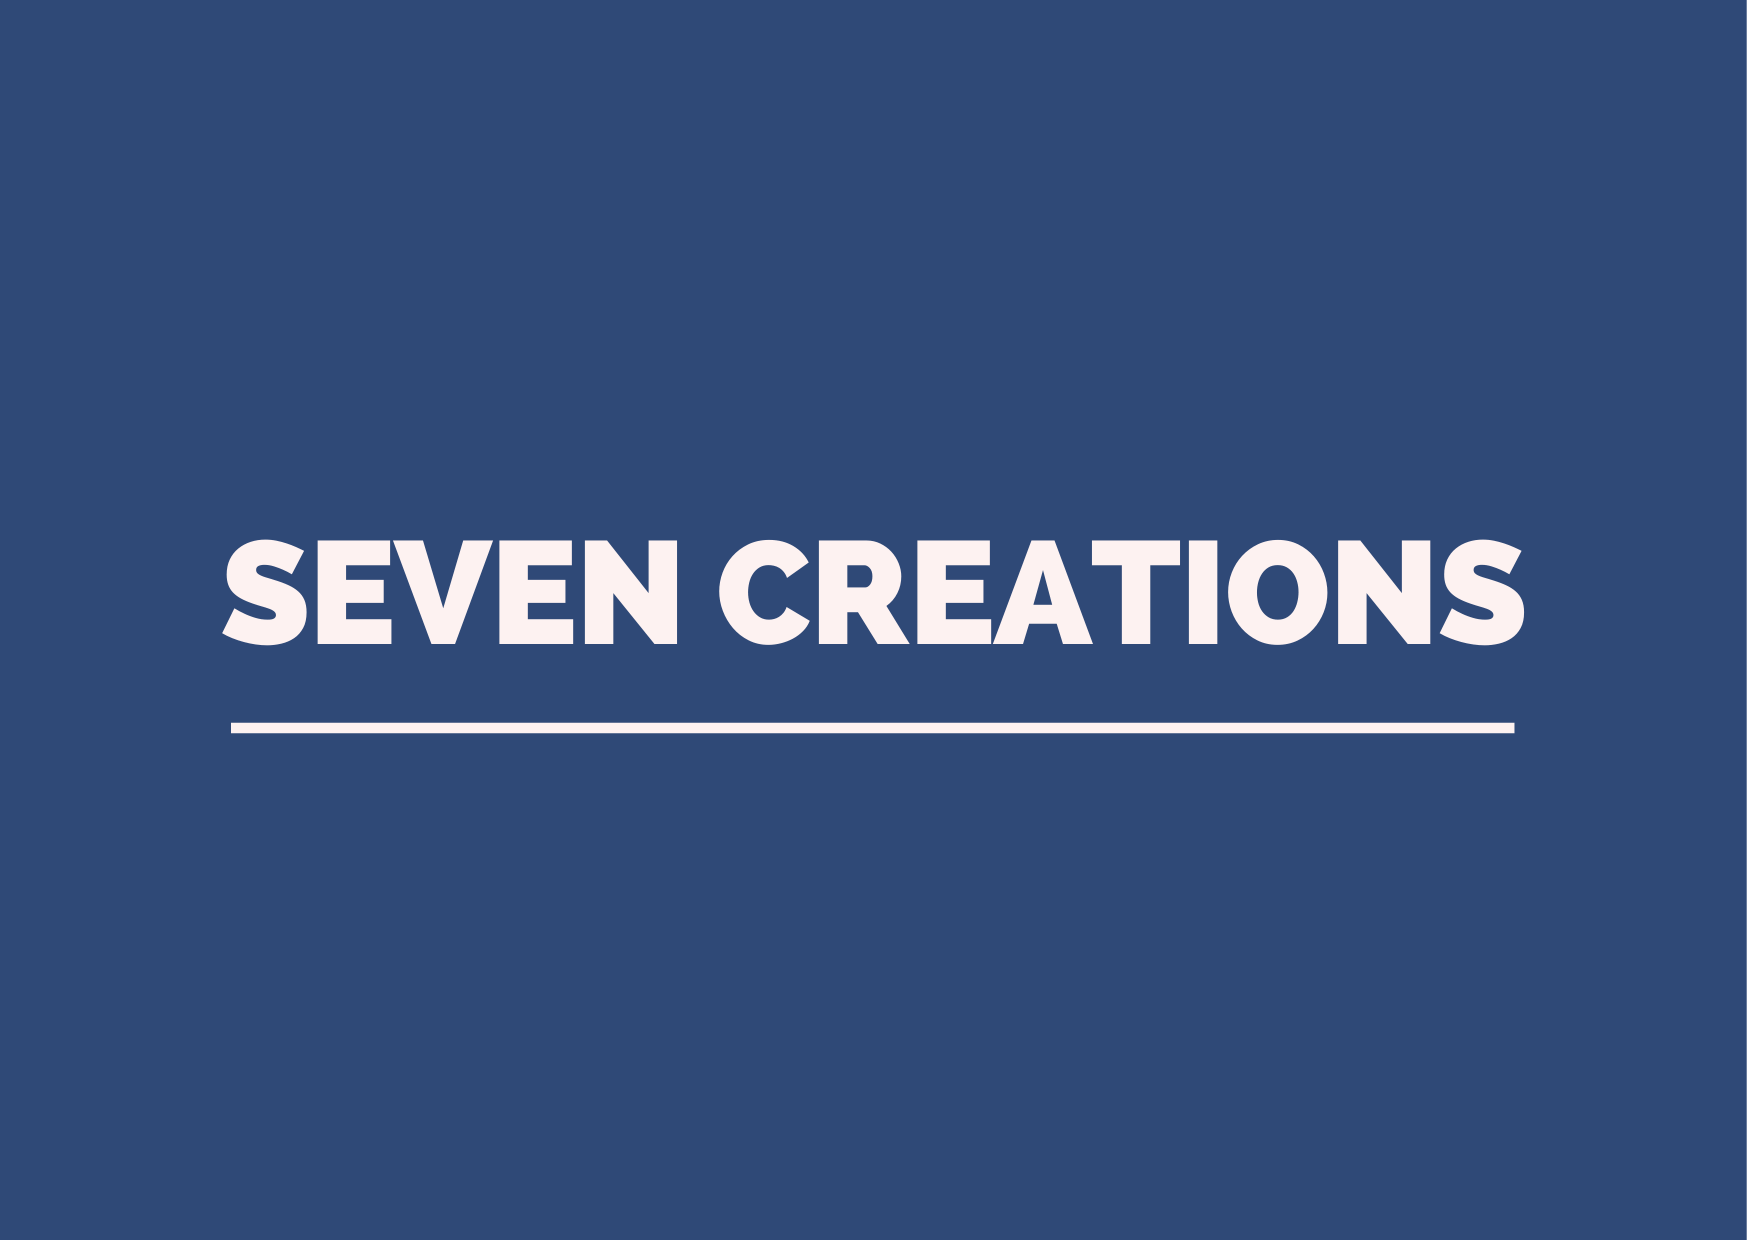 seven creations text